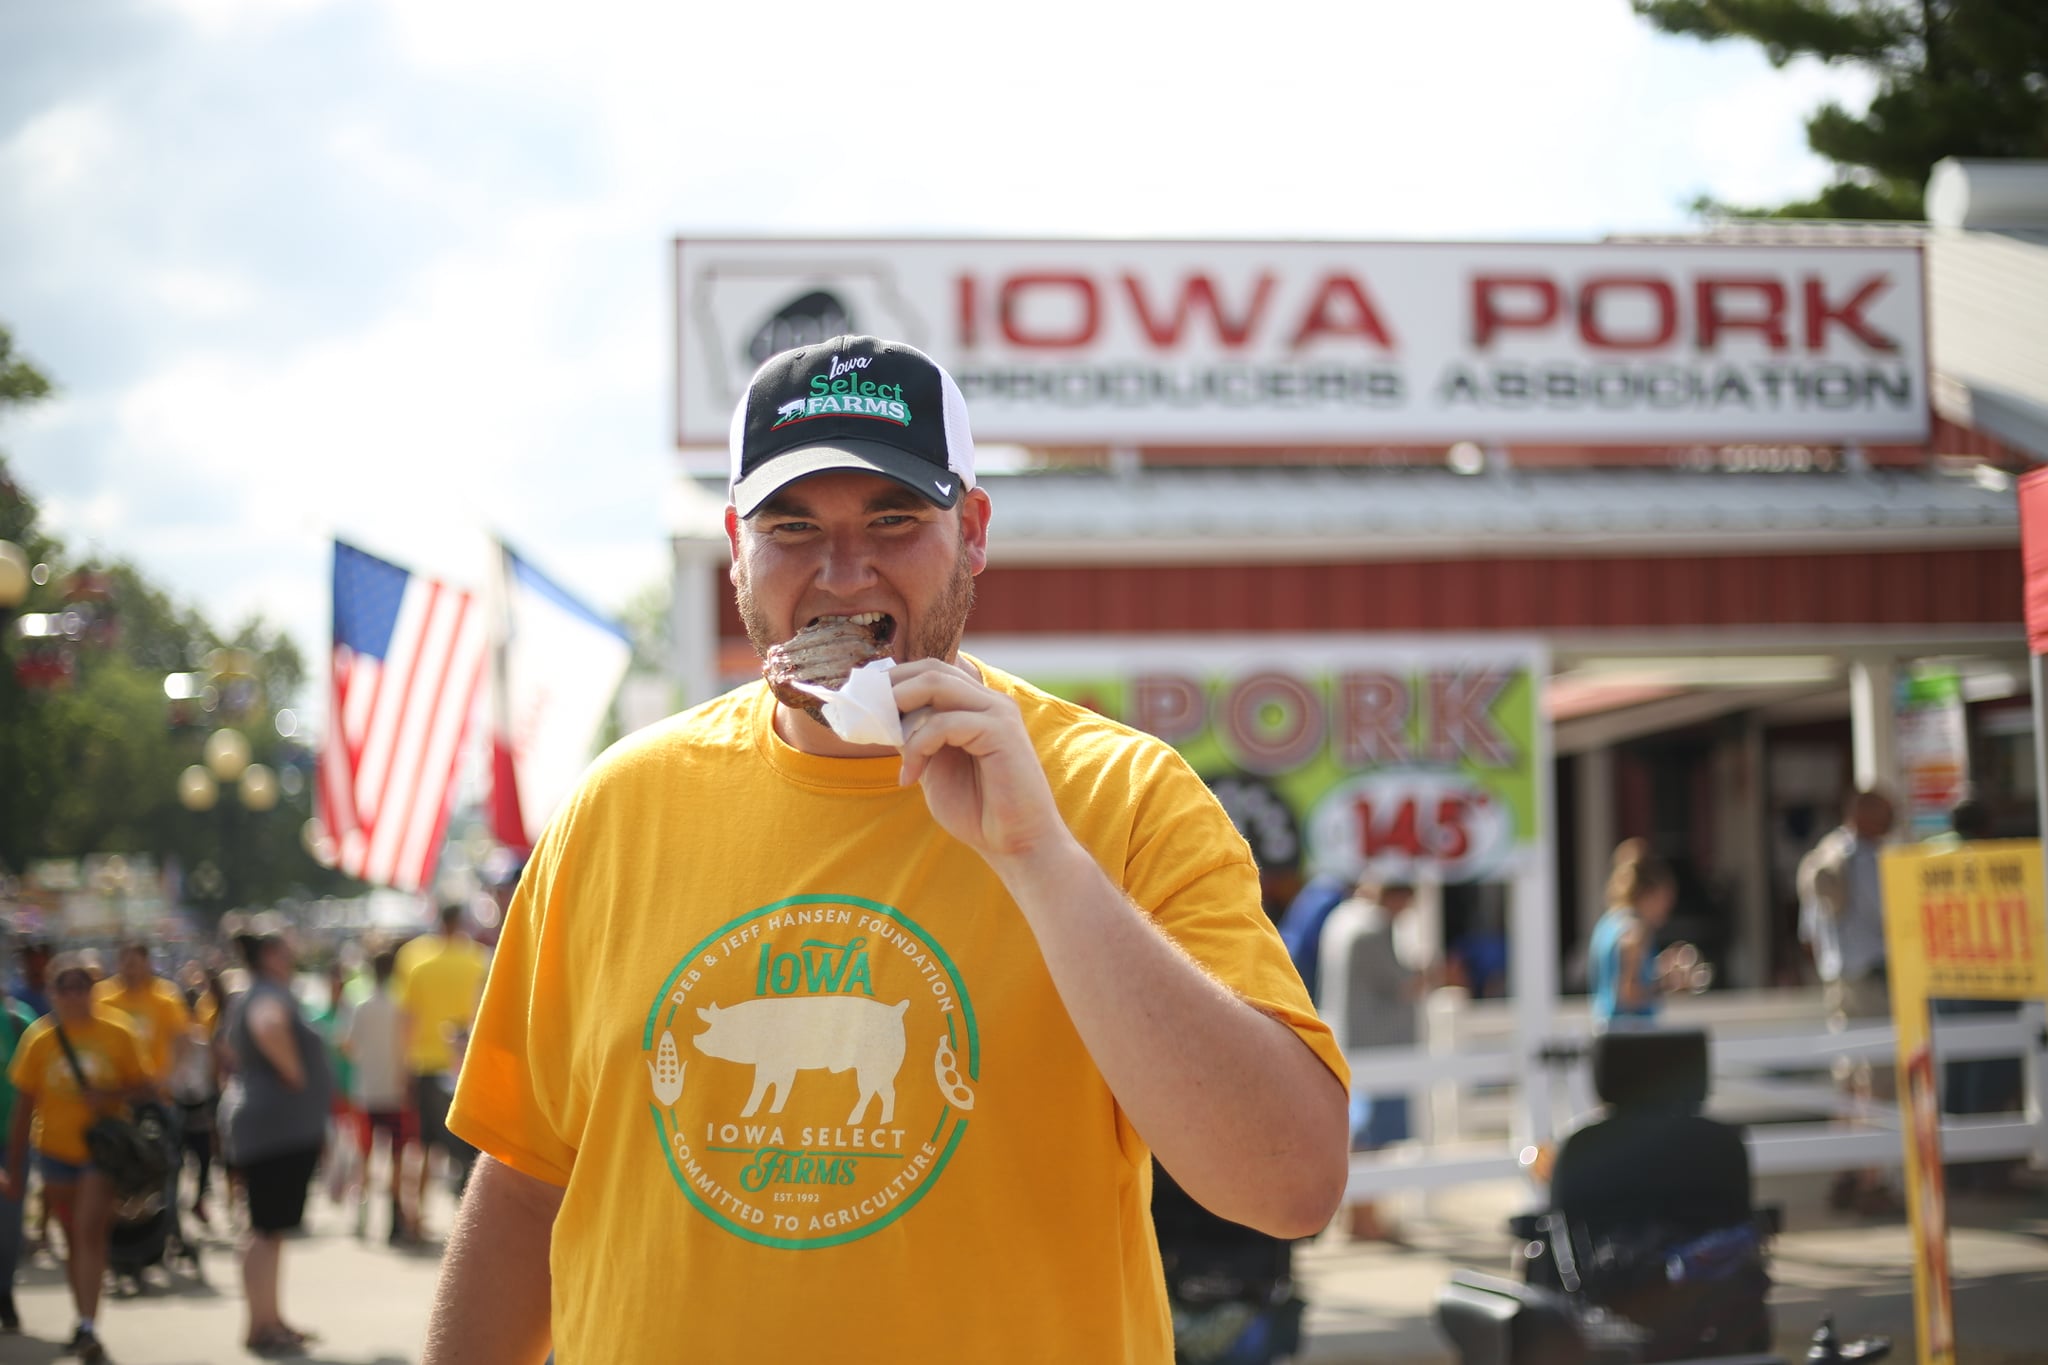 Ezra takes a bite of a pork chop outside the Iowa Pork tent.